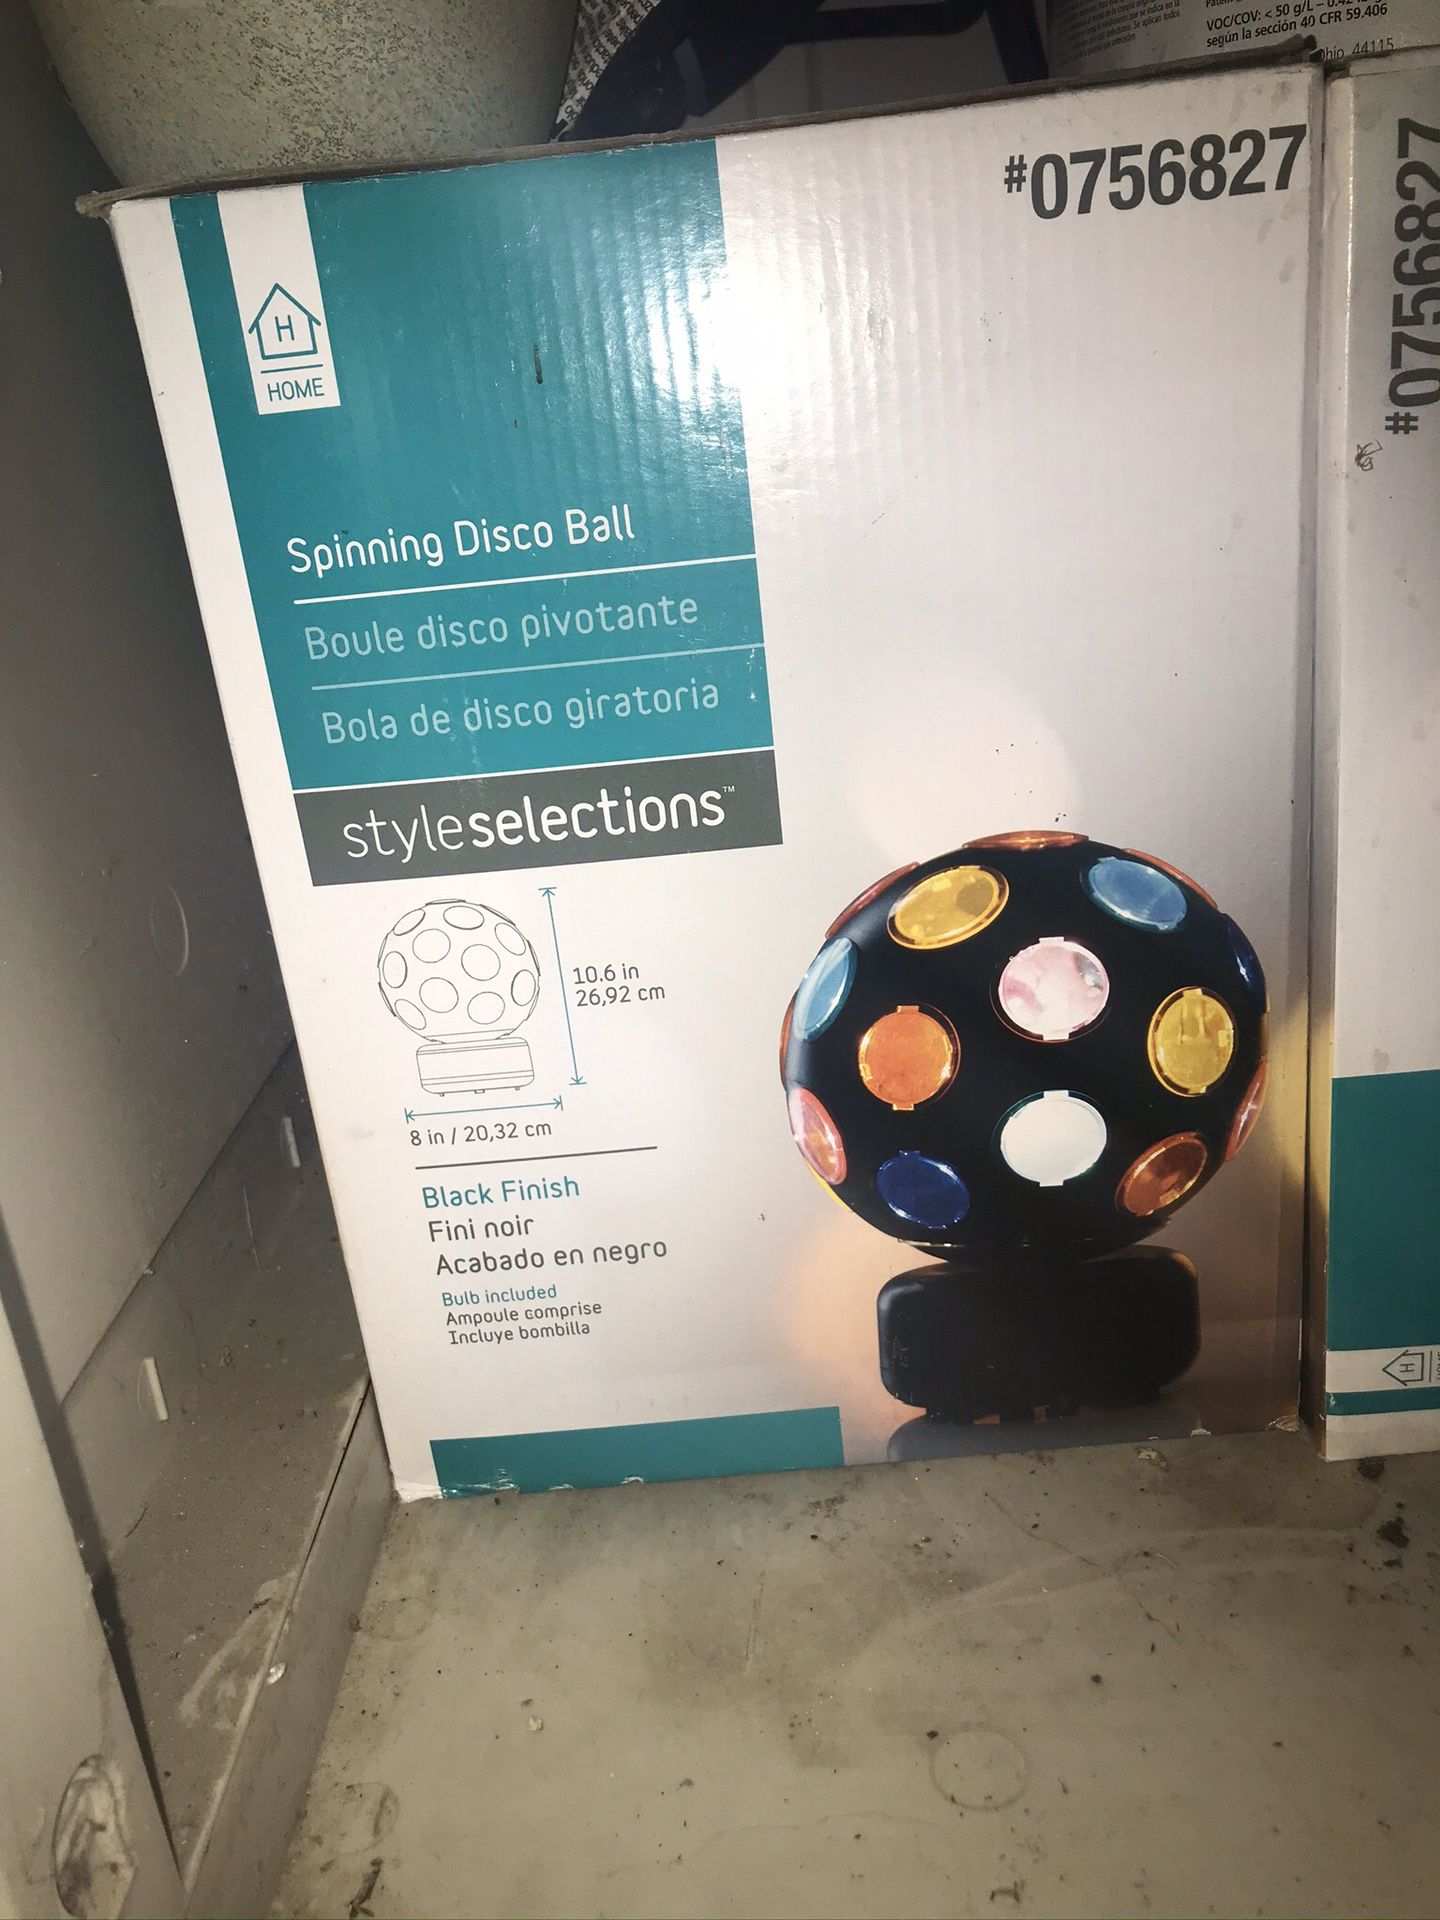 Spinning disco ball